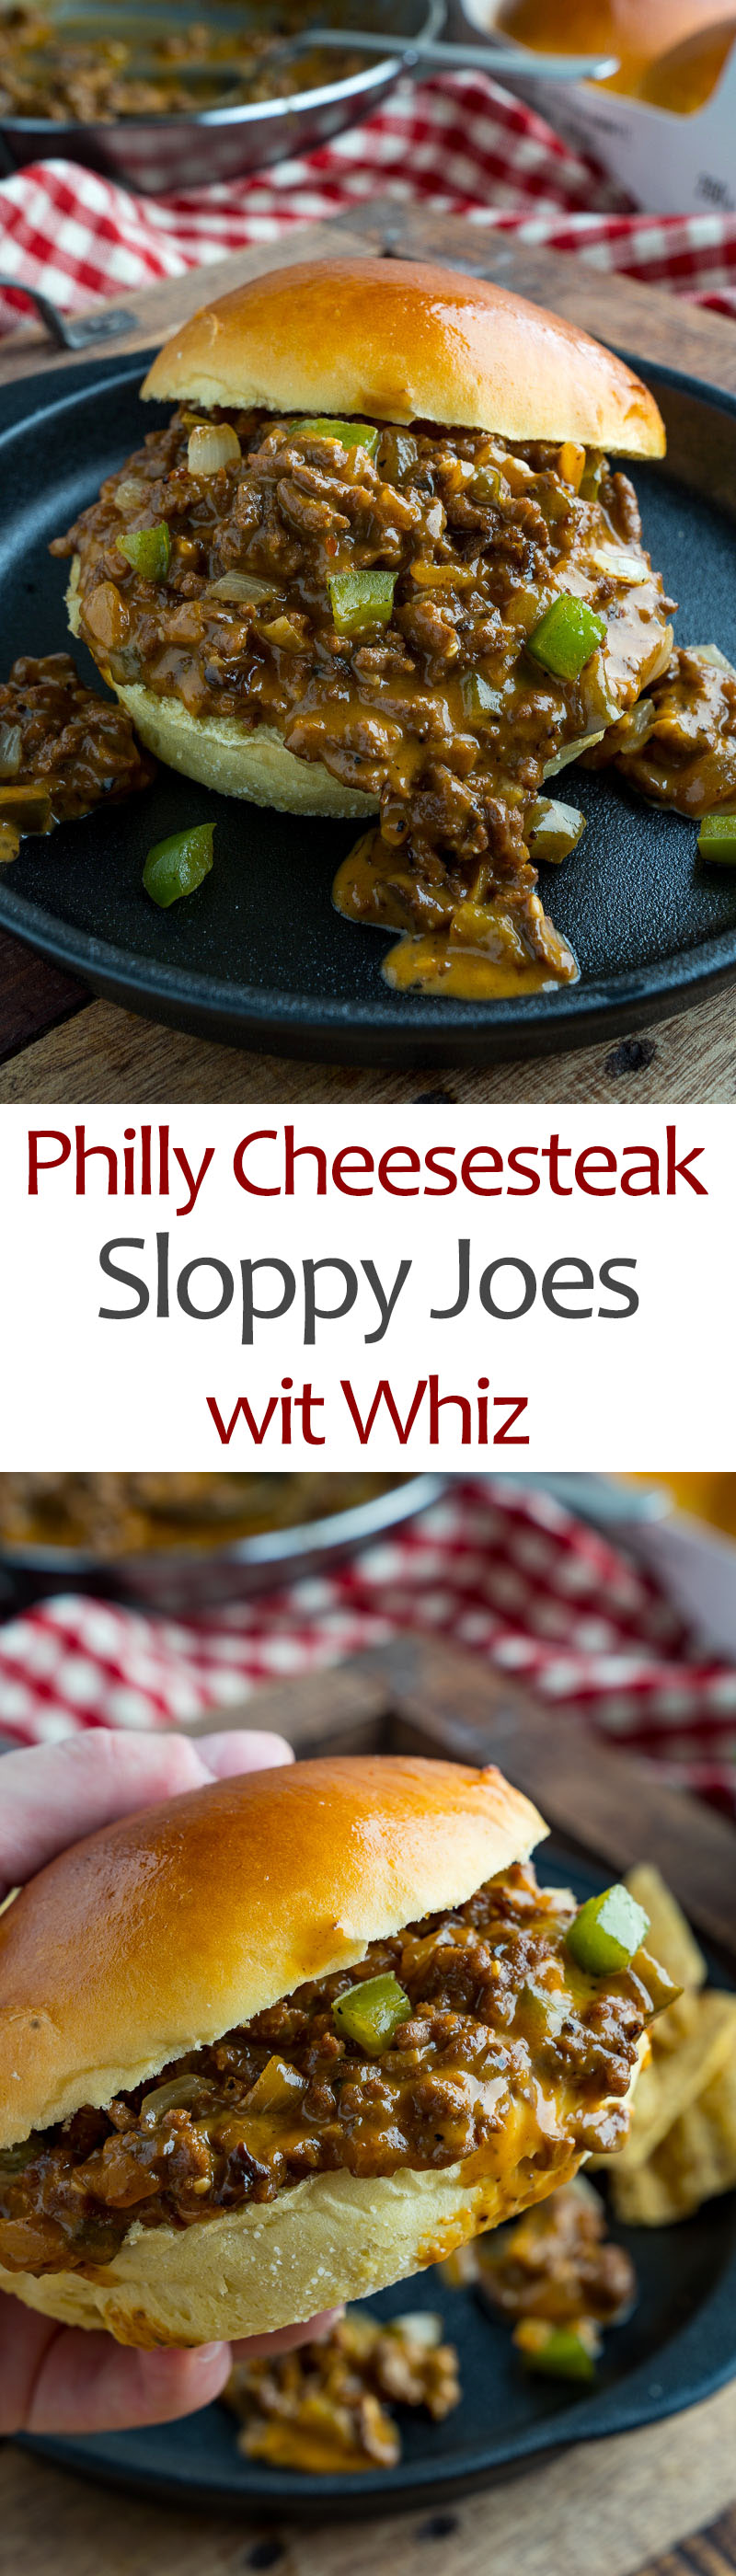 Philly Cheesesteak Sloppy Joes with Whiz